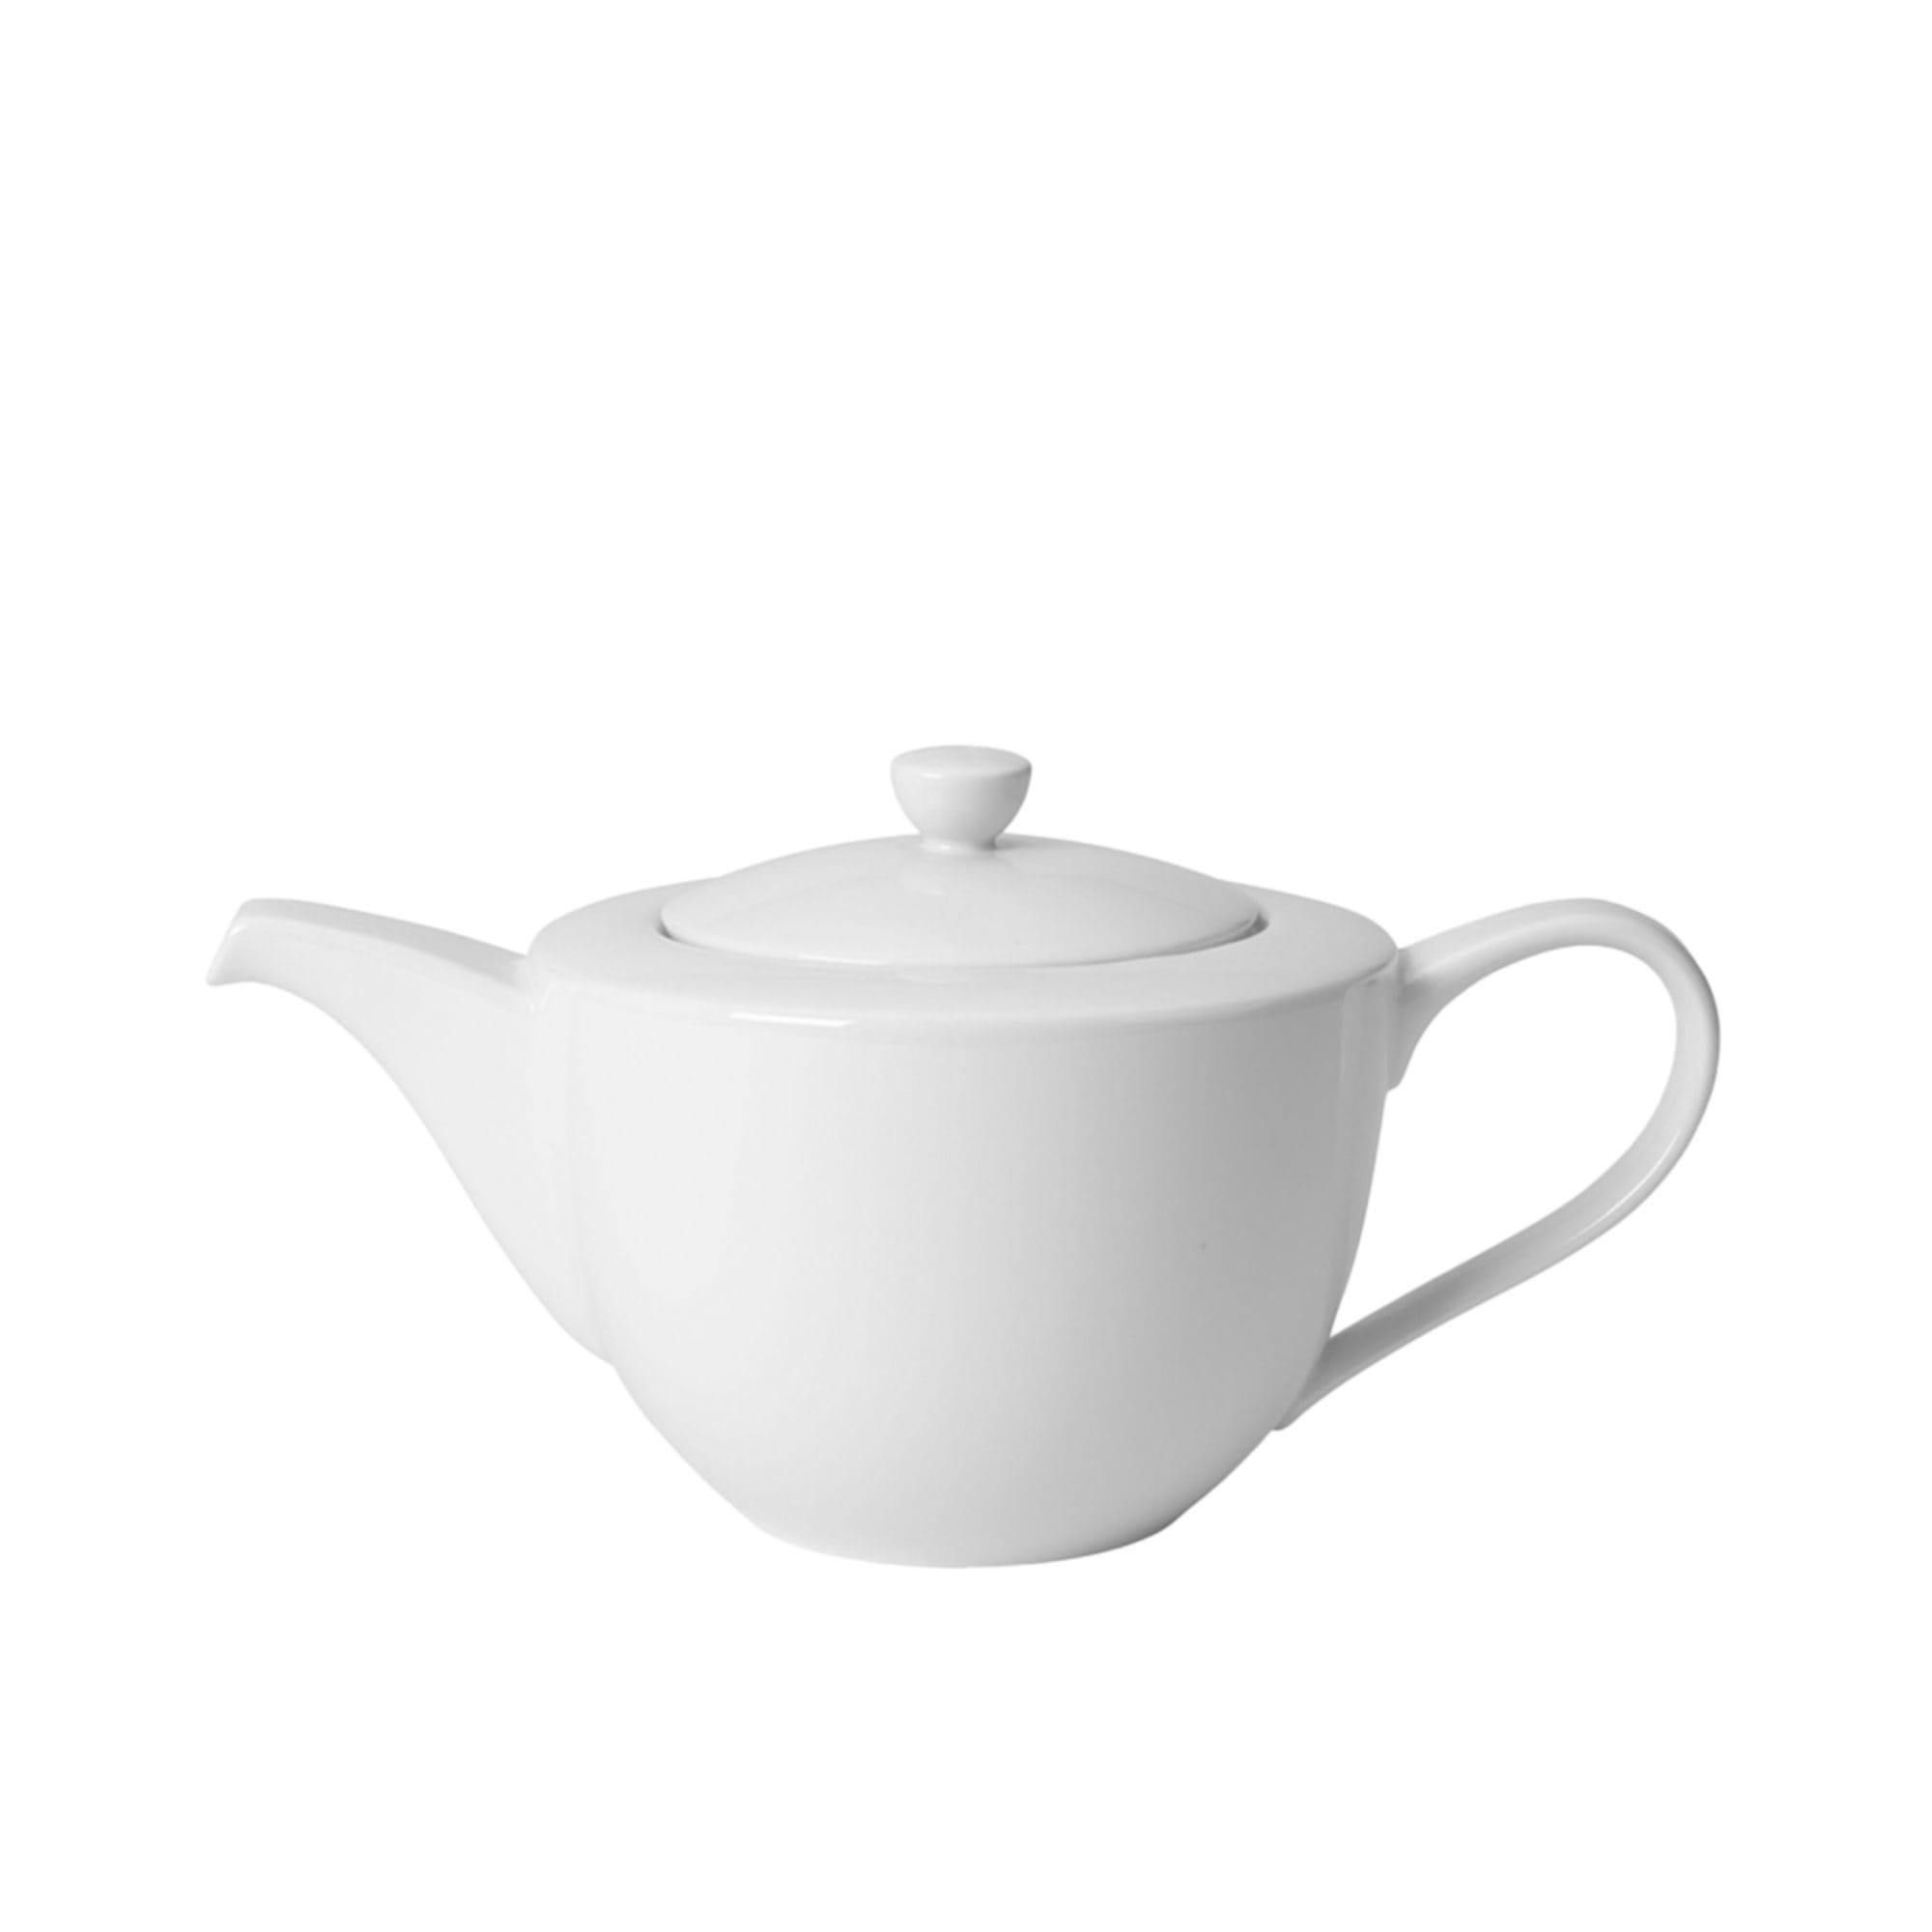 Villeroy & Boch For Me Teapot 1.3L Image 1